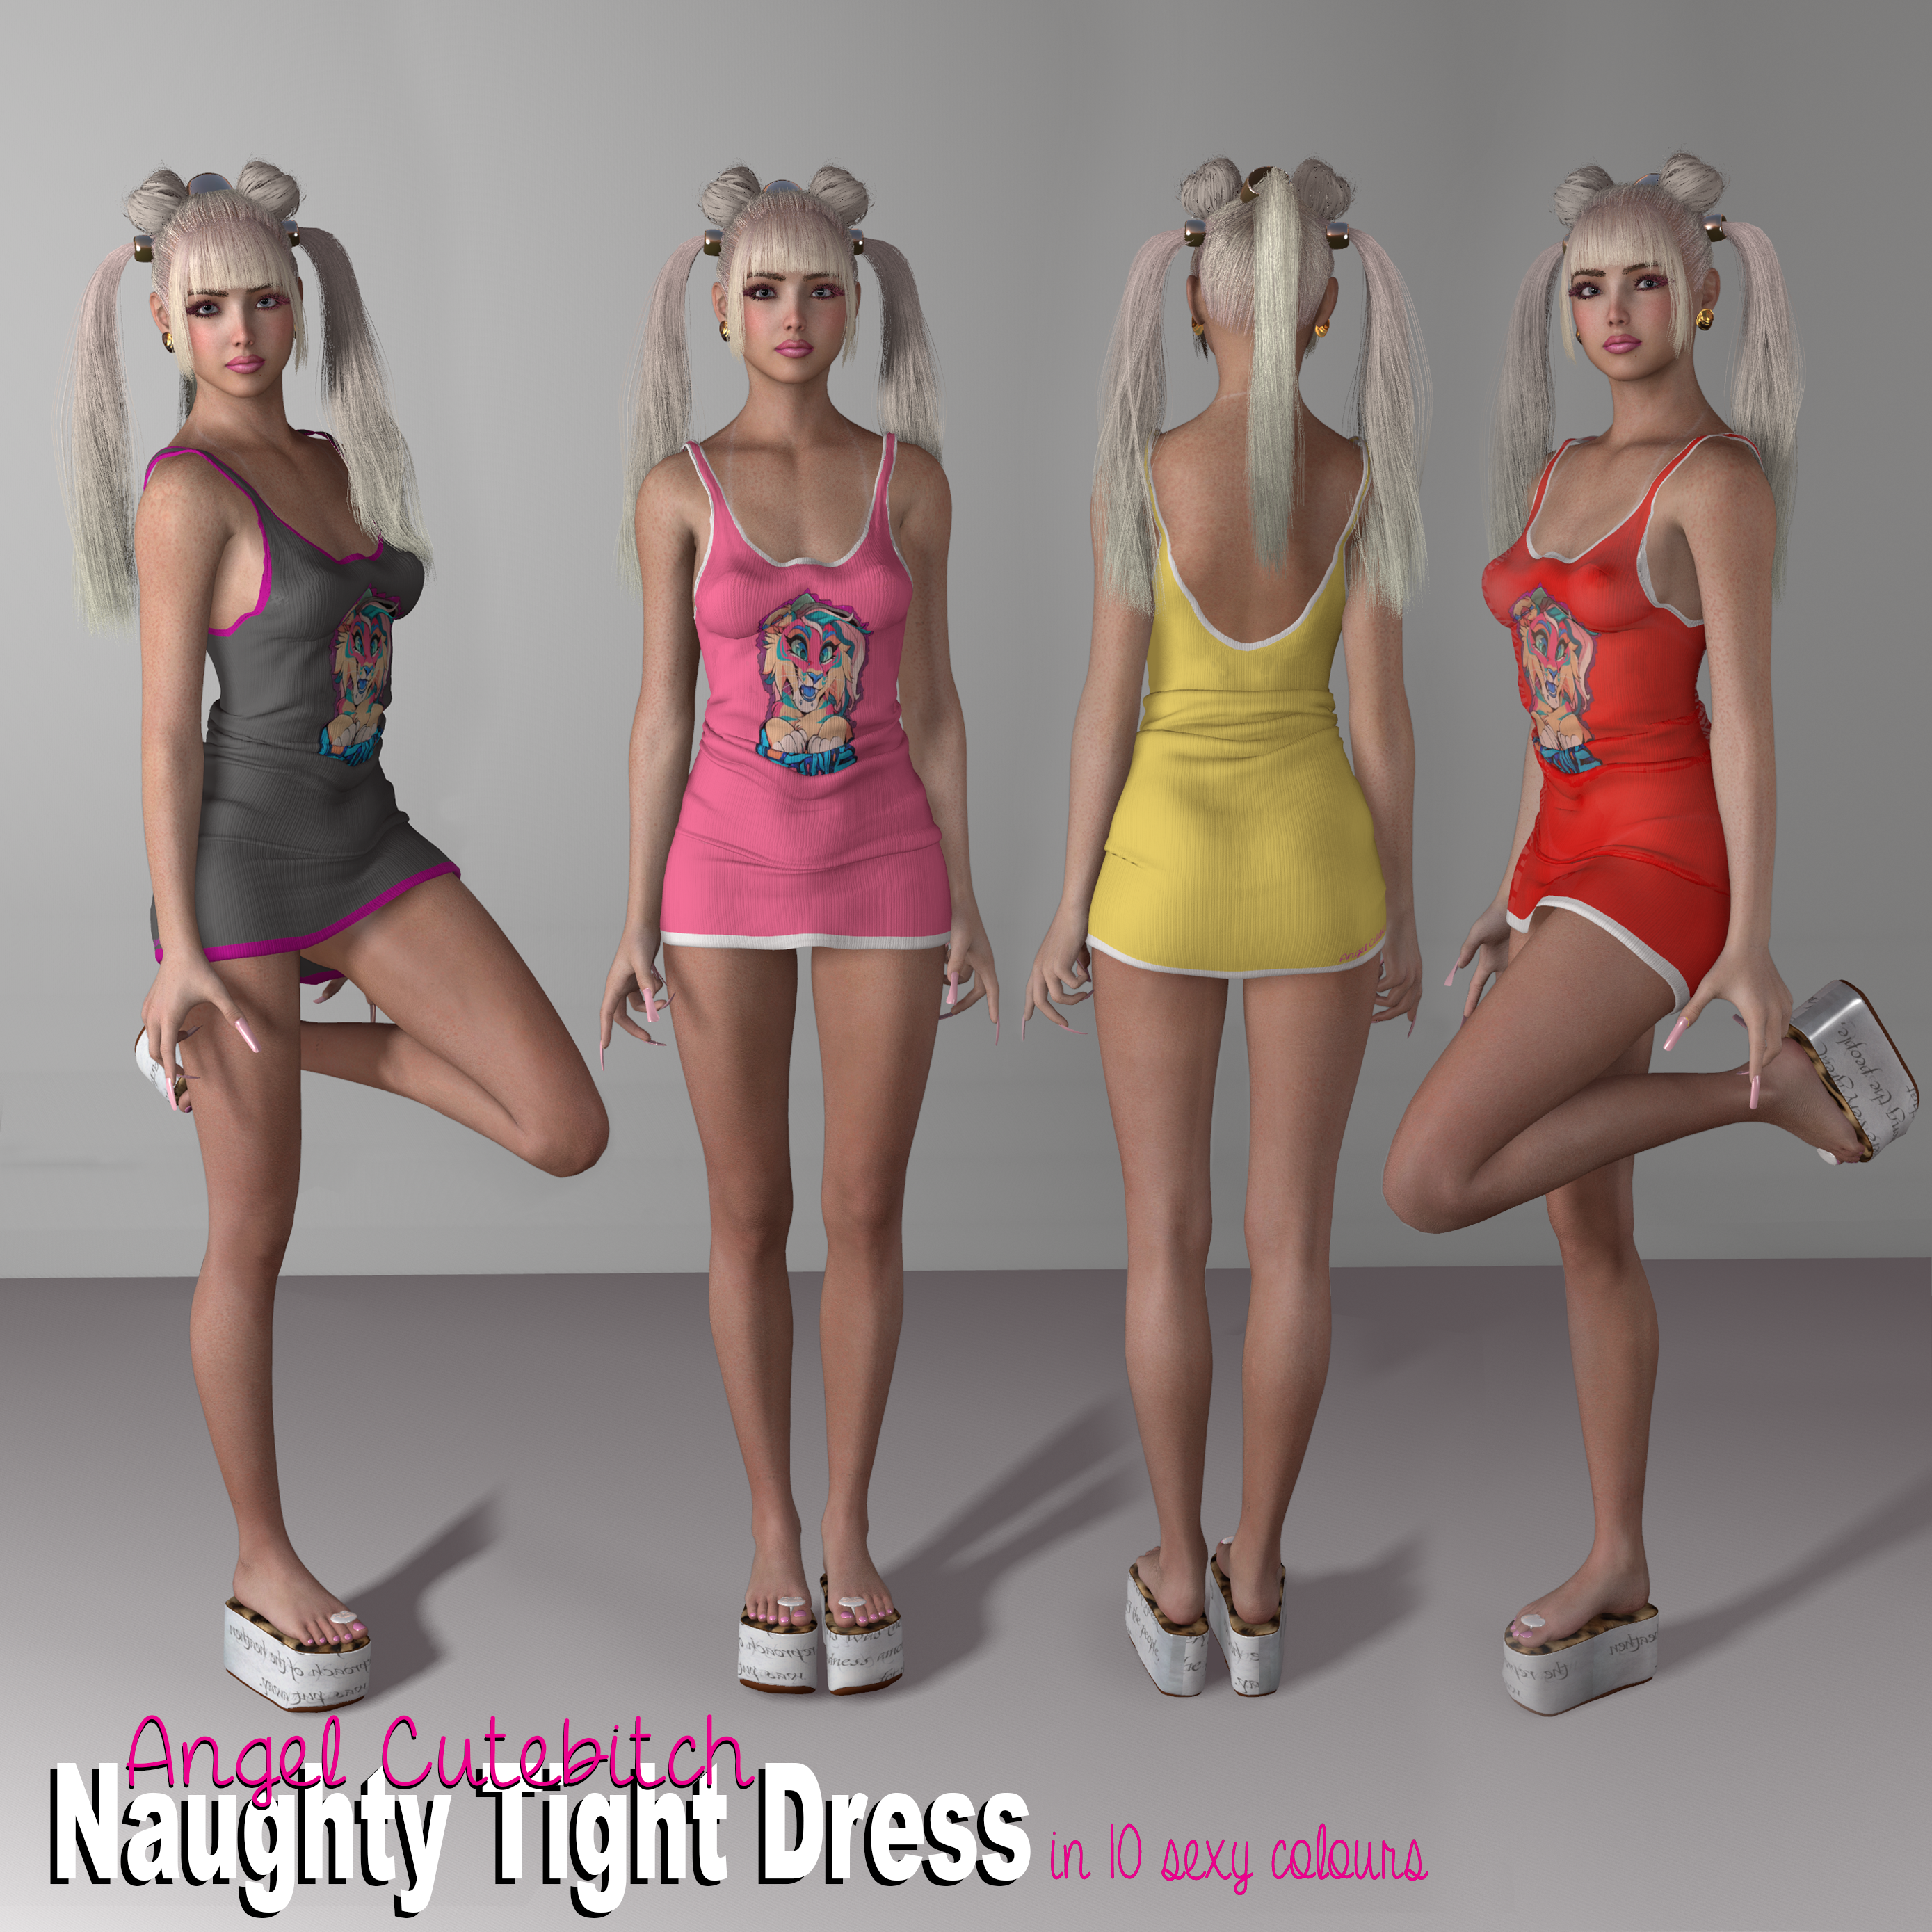 Dress_NaughtyTightDress_SQ.png